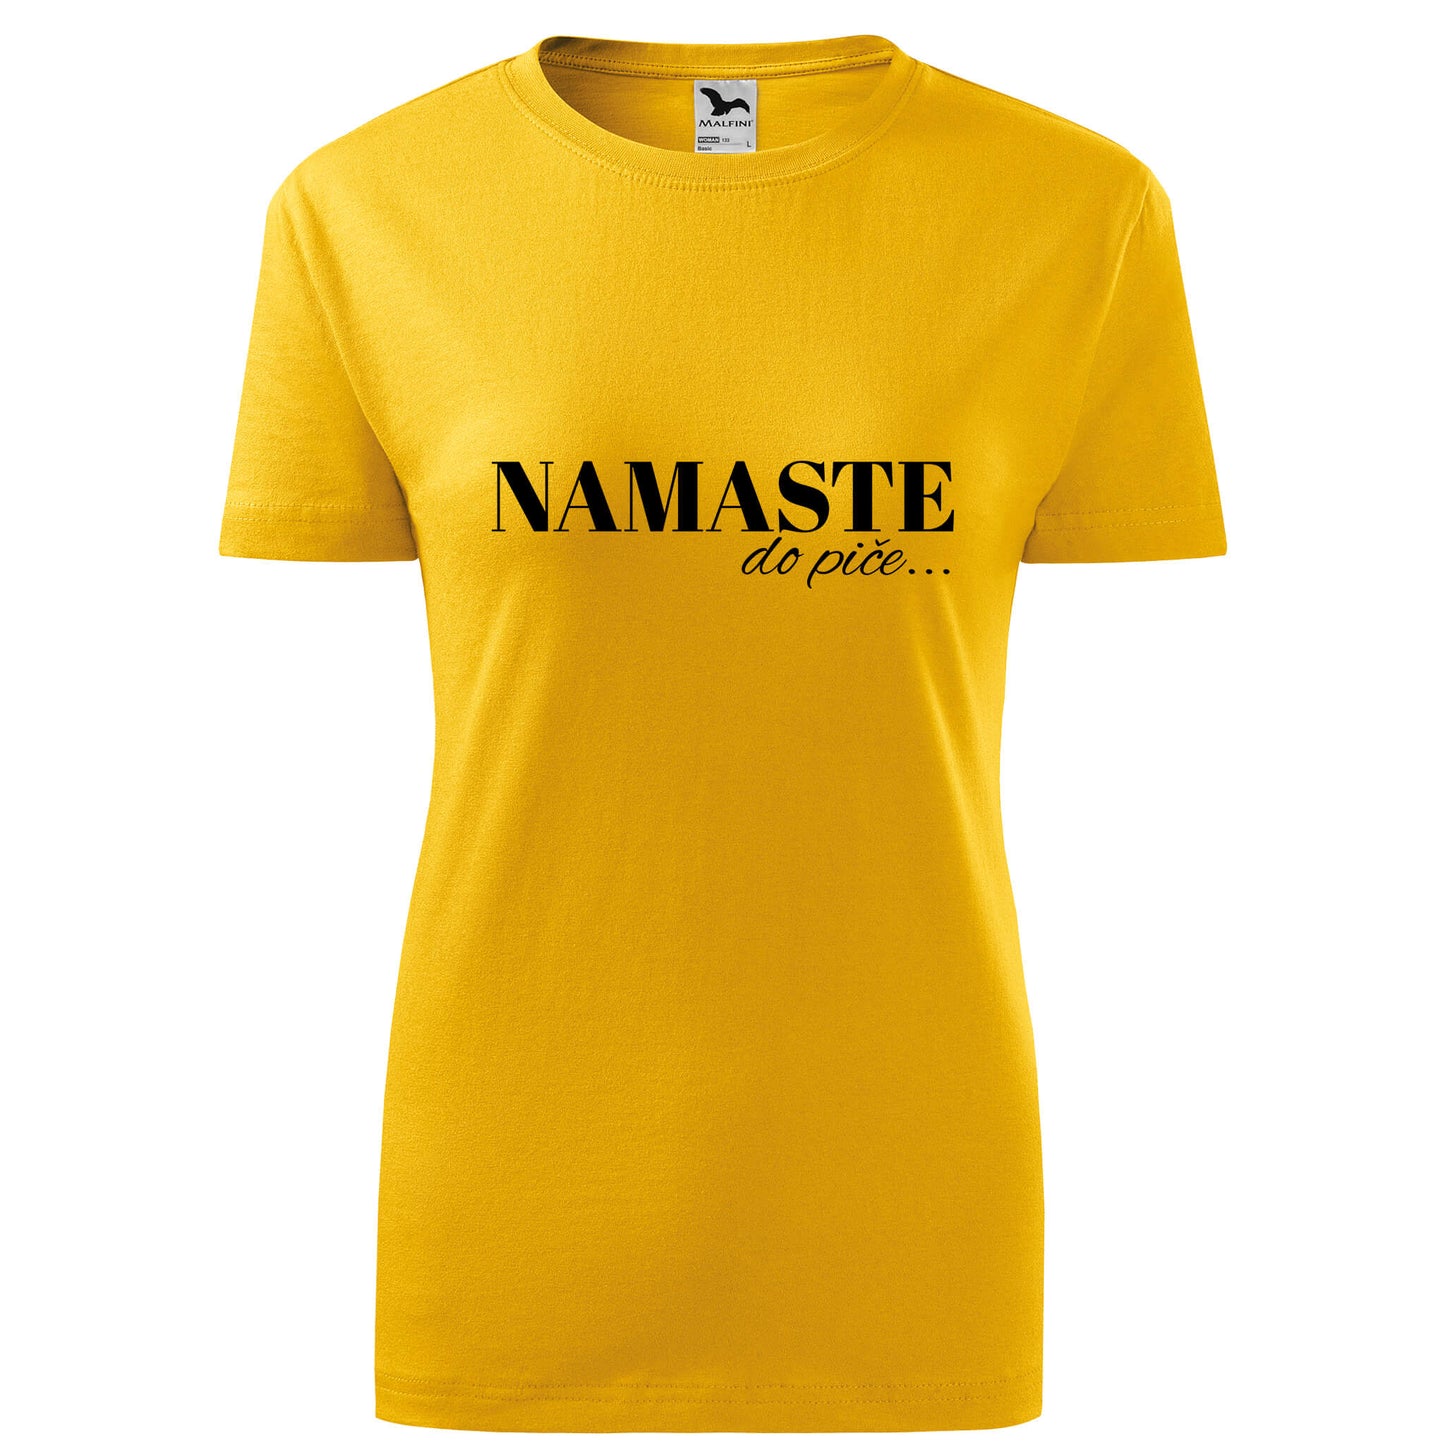 Namaste do pice t-shirt - rvdesignprint